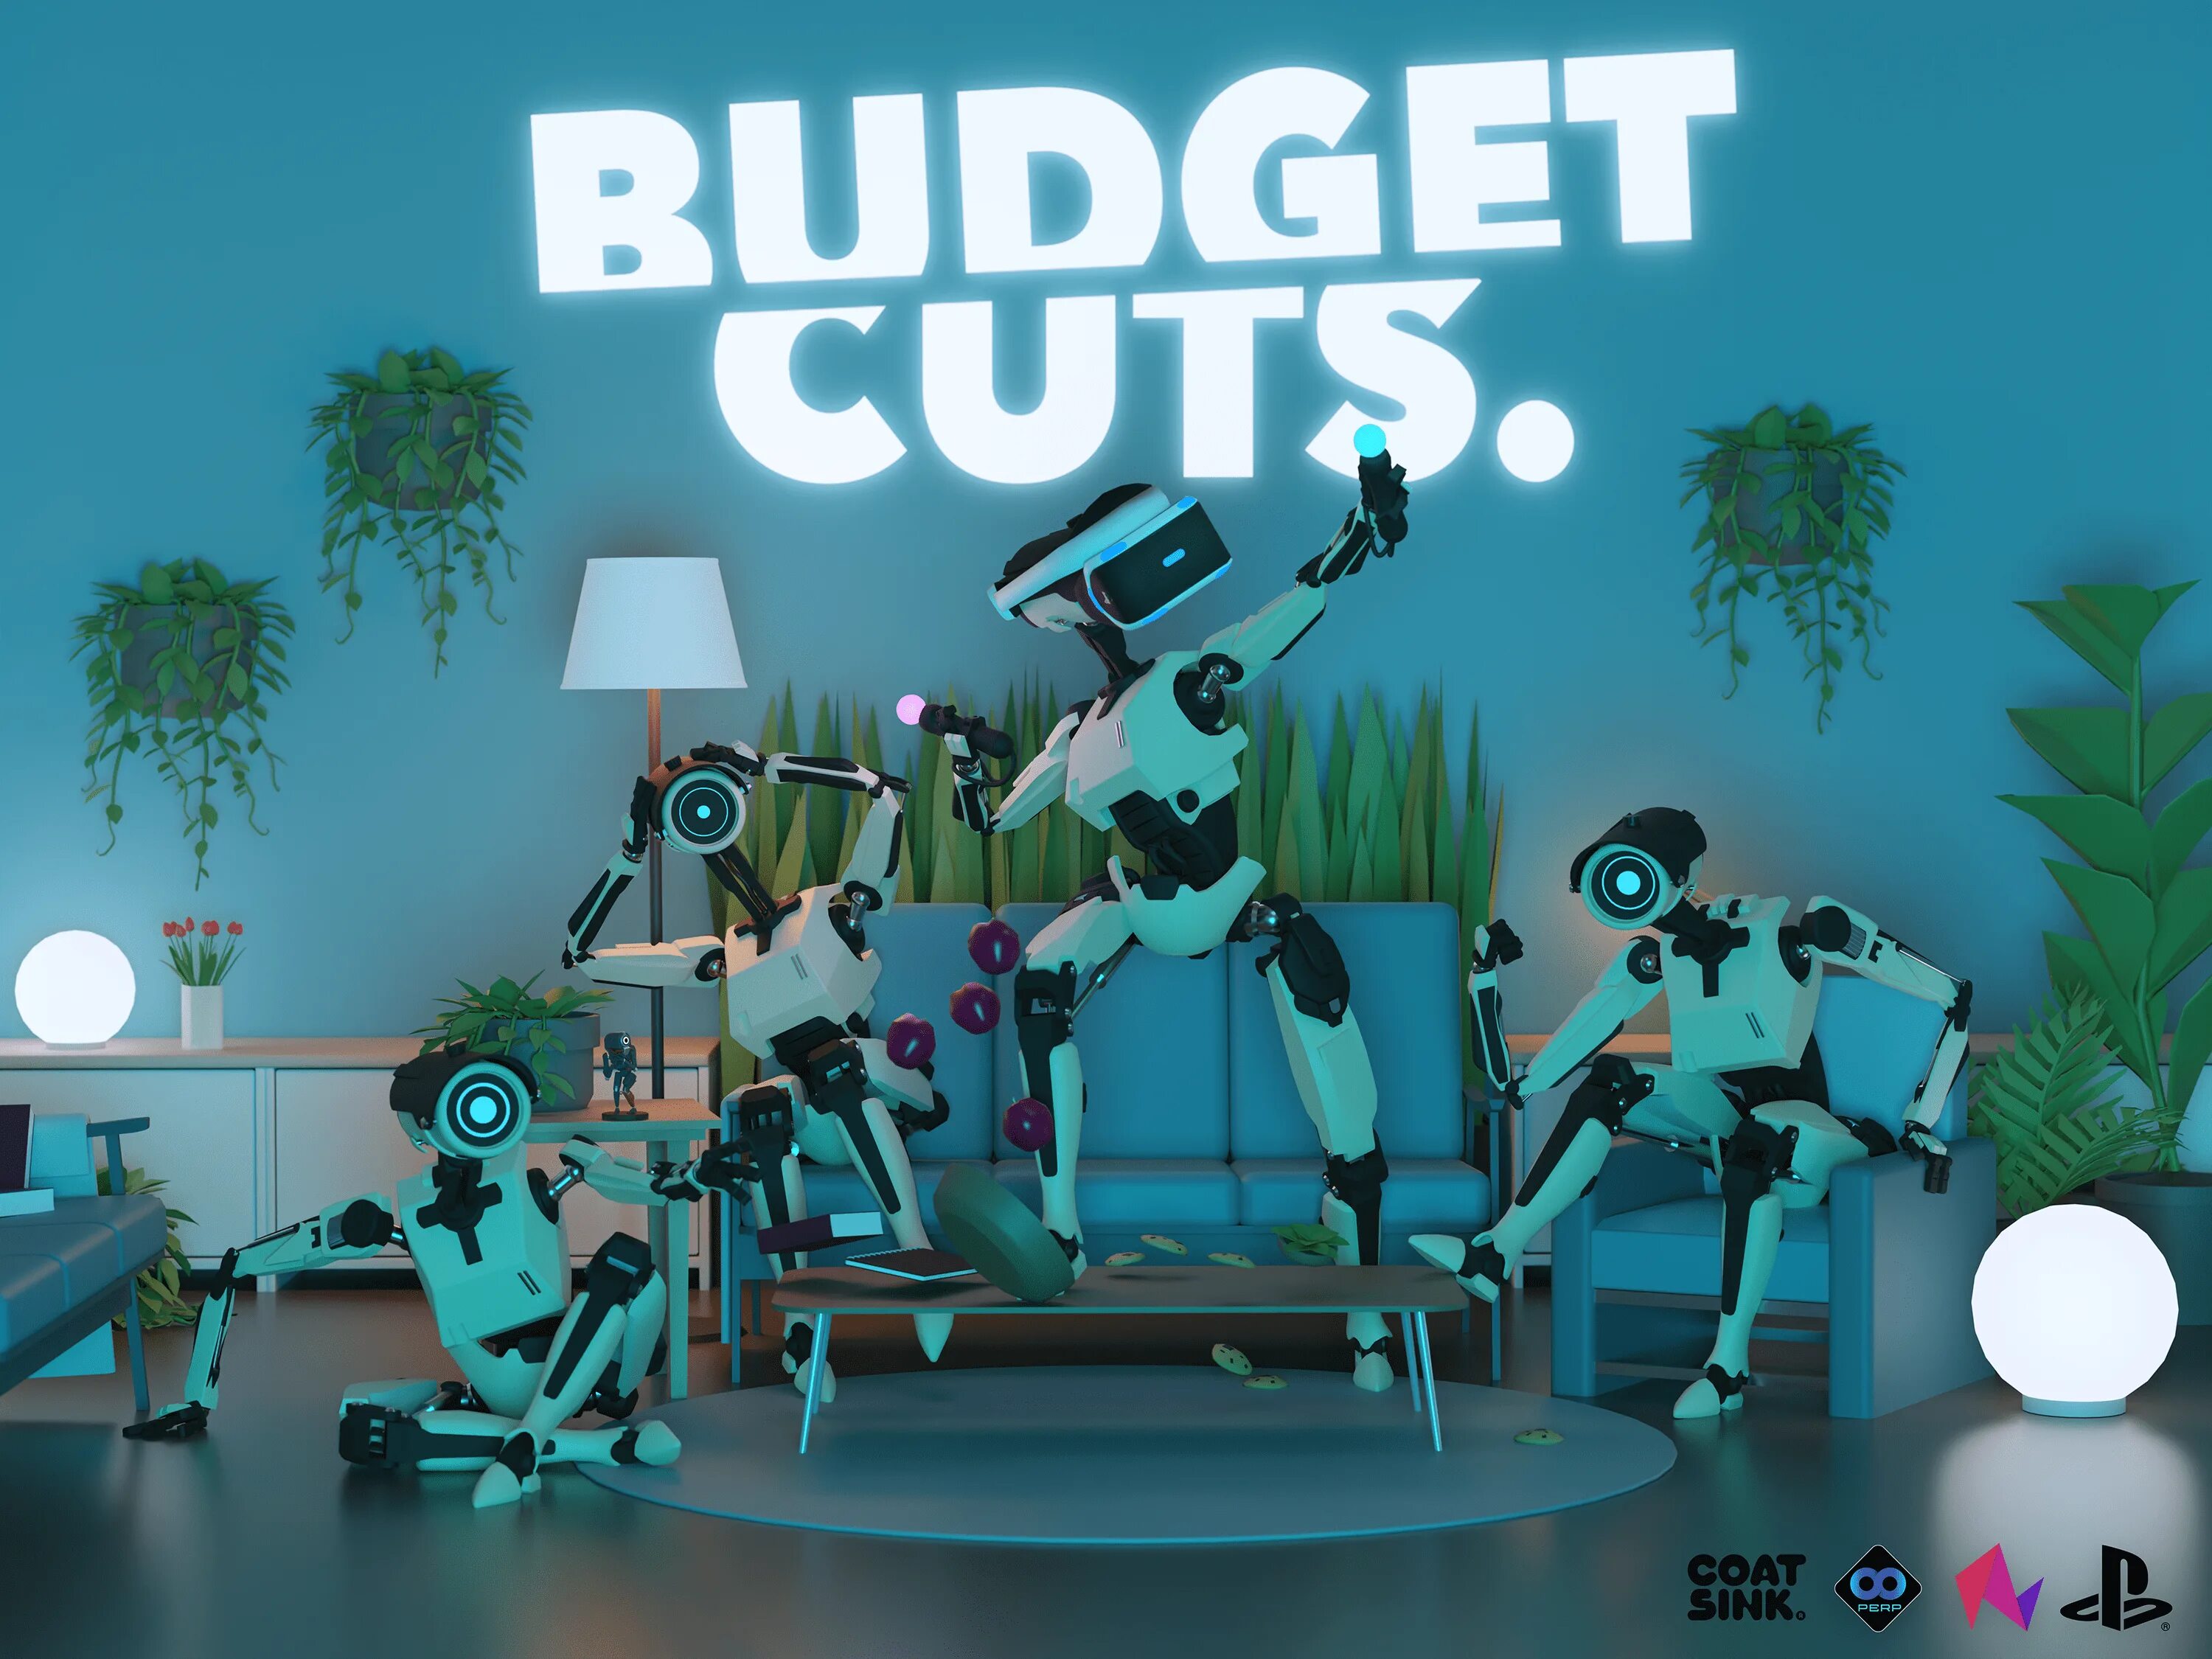 Budget Cuts 2 PS VR. Budget Cuts VR ps4. Budget Cuts игра. VR budget budget Cuts роботы.